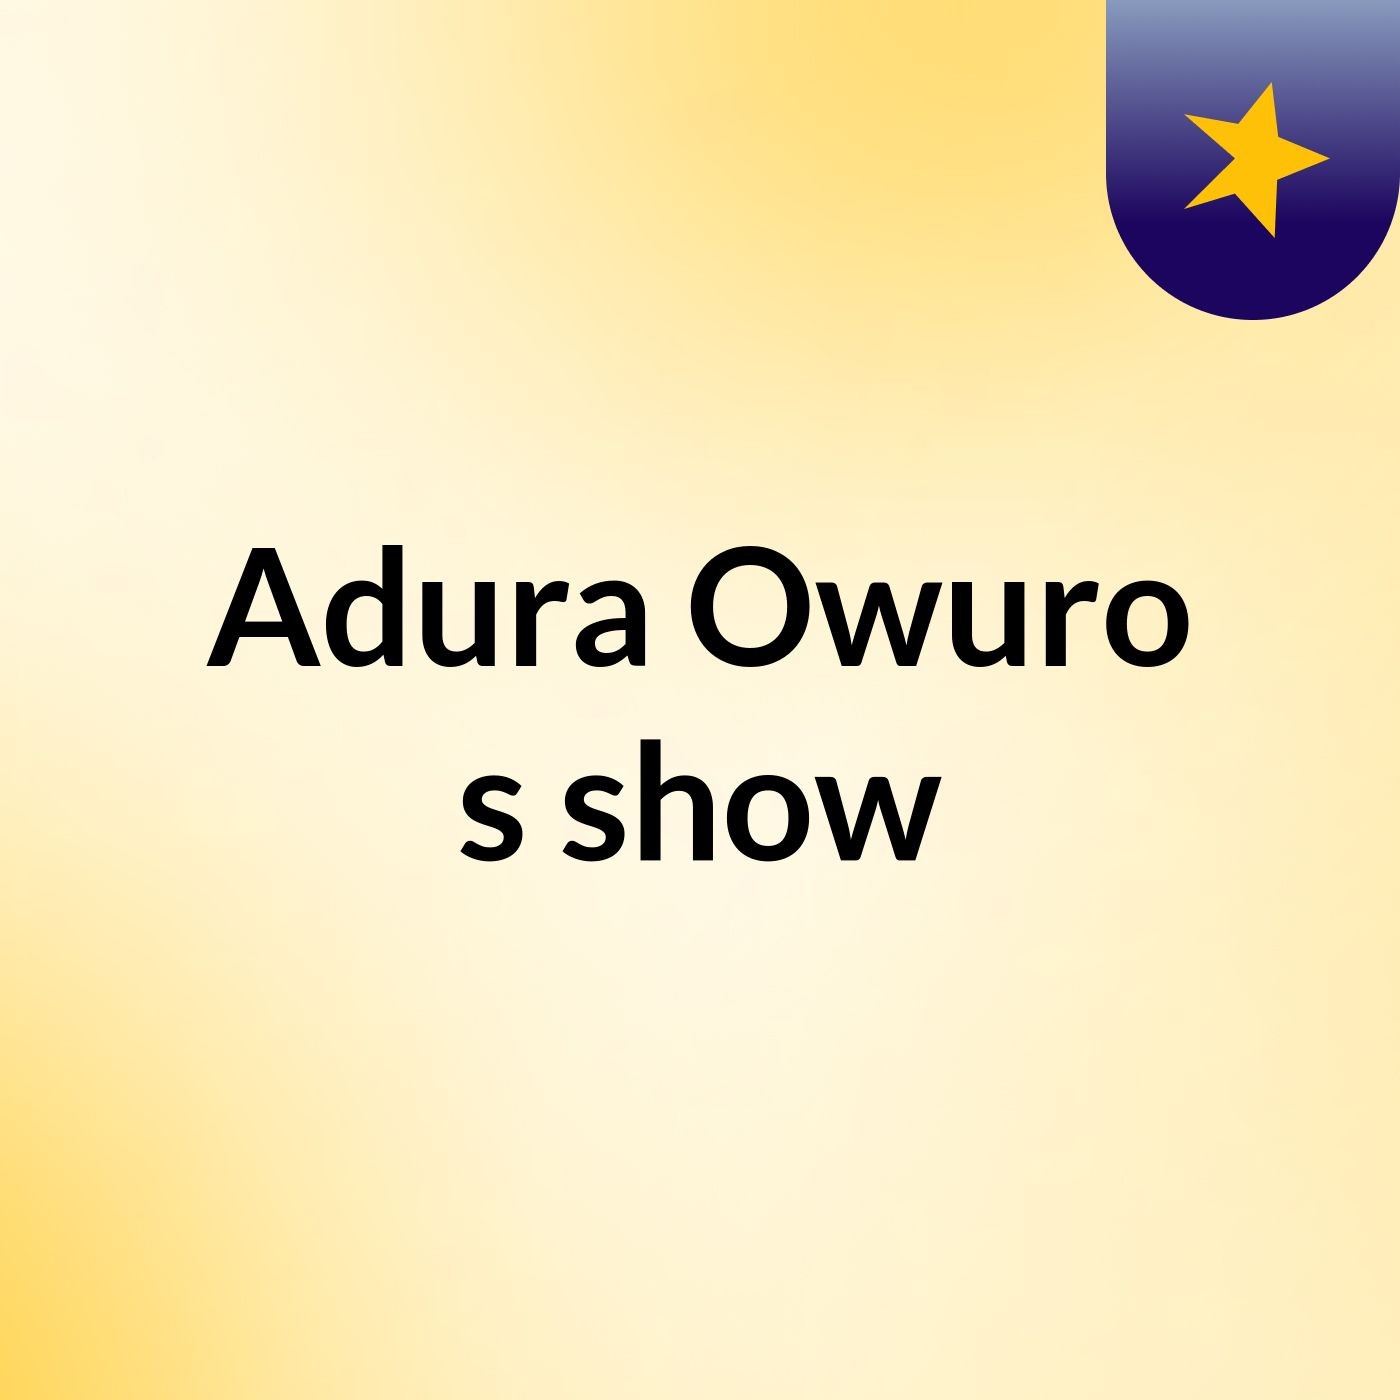 Adura Owuro's show